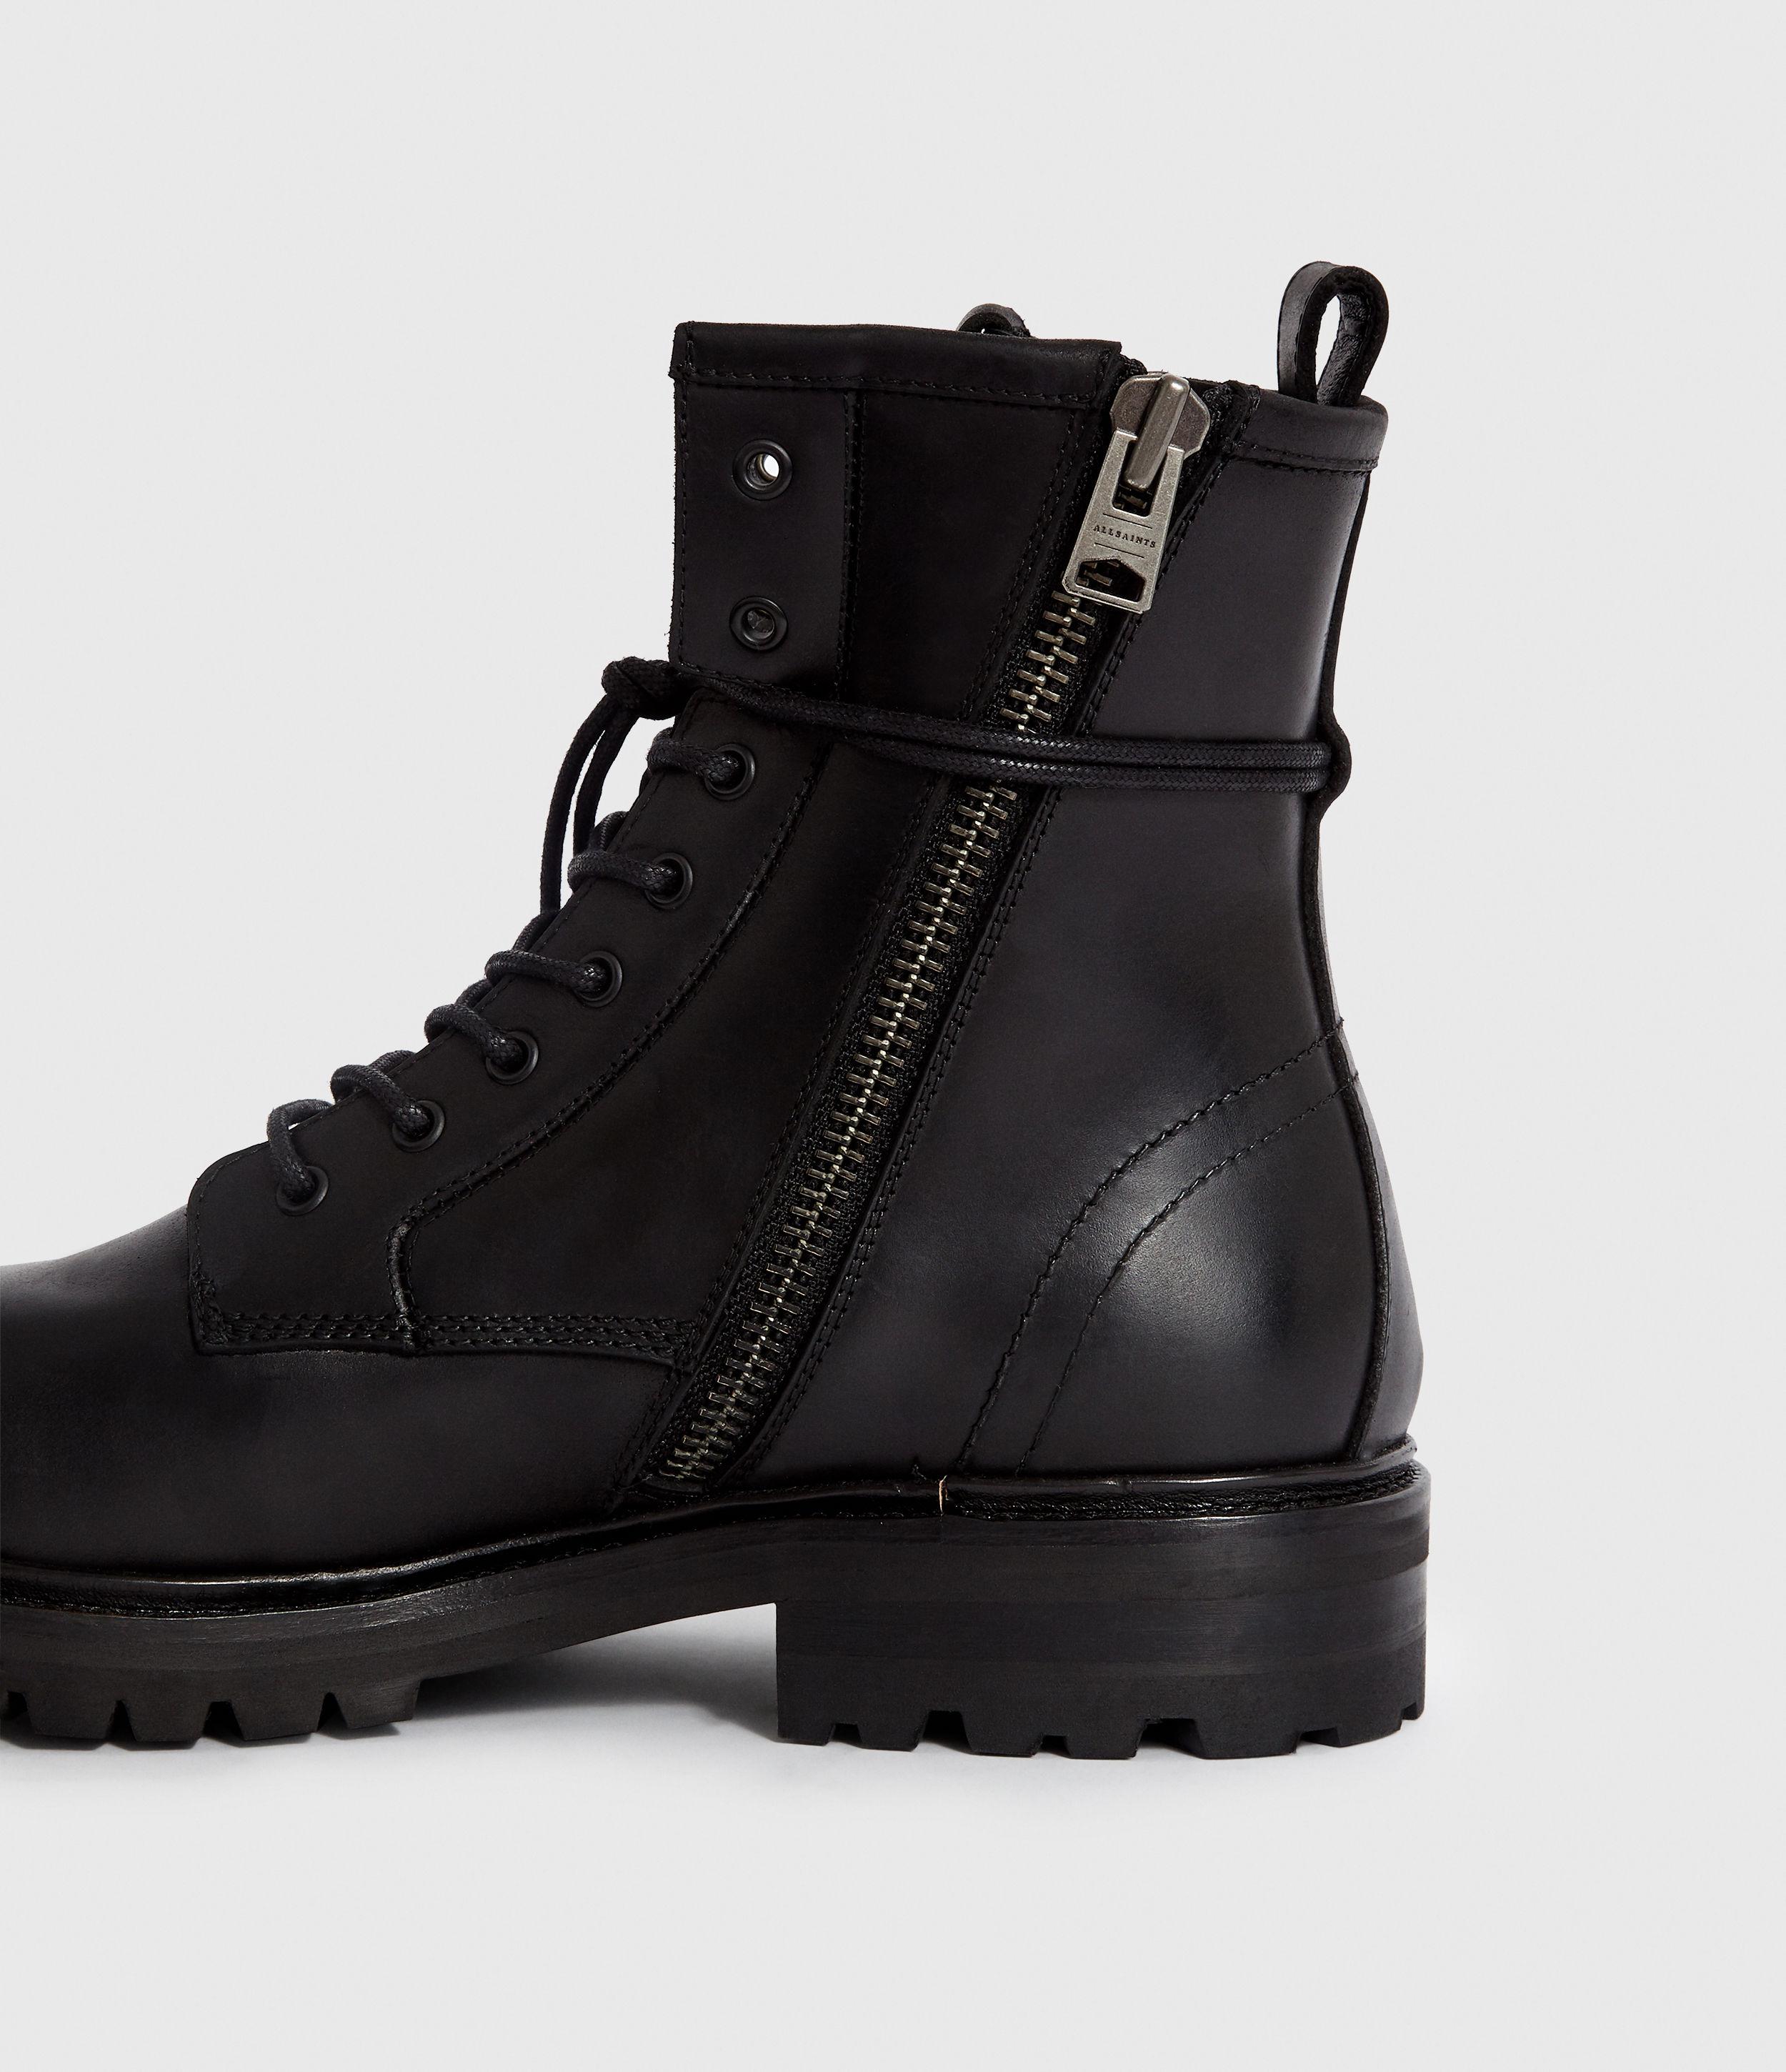 AllSaints Men's Olin Leather Boots in Black for Men - Lyst